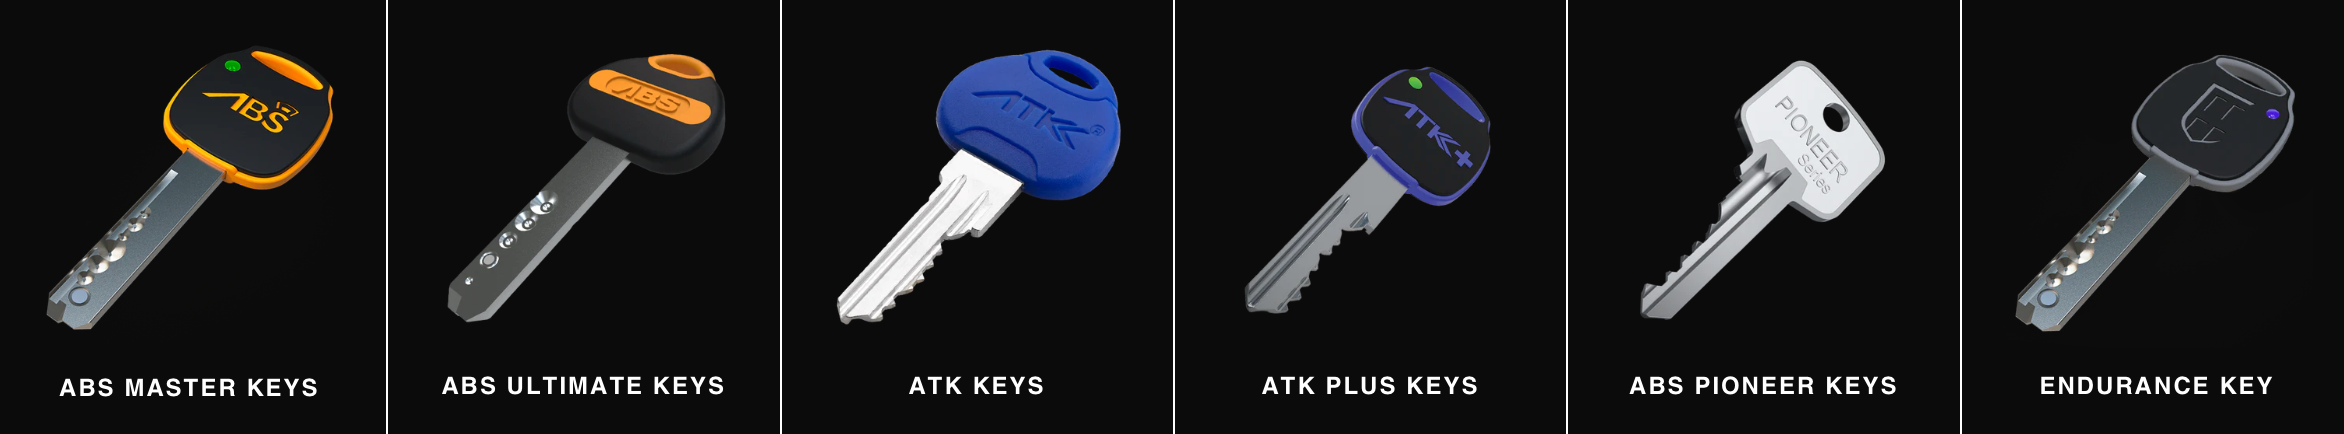 Types of keys for ABS locks.